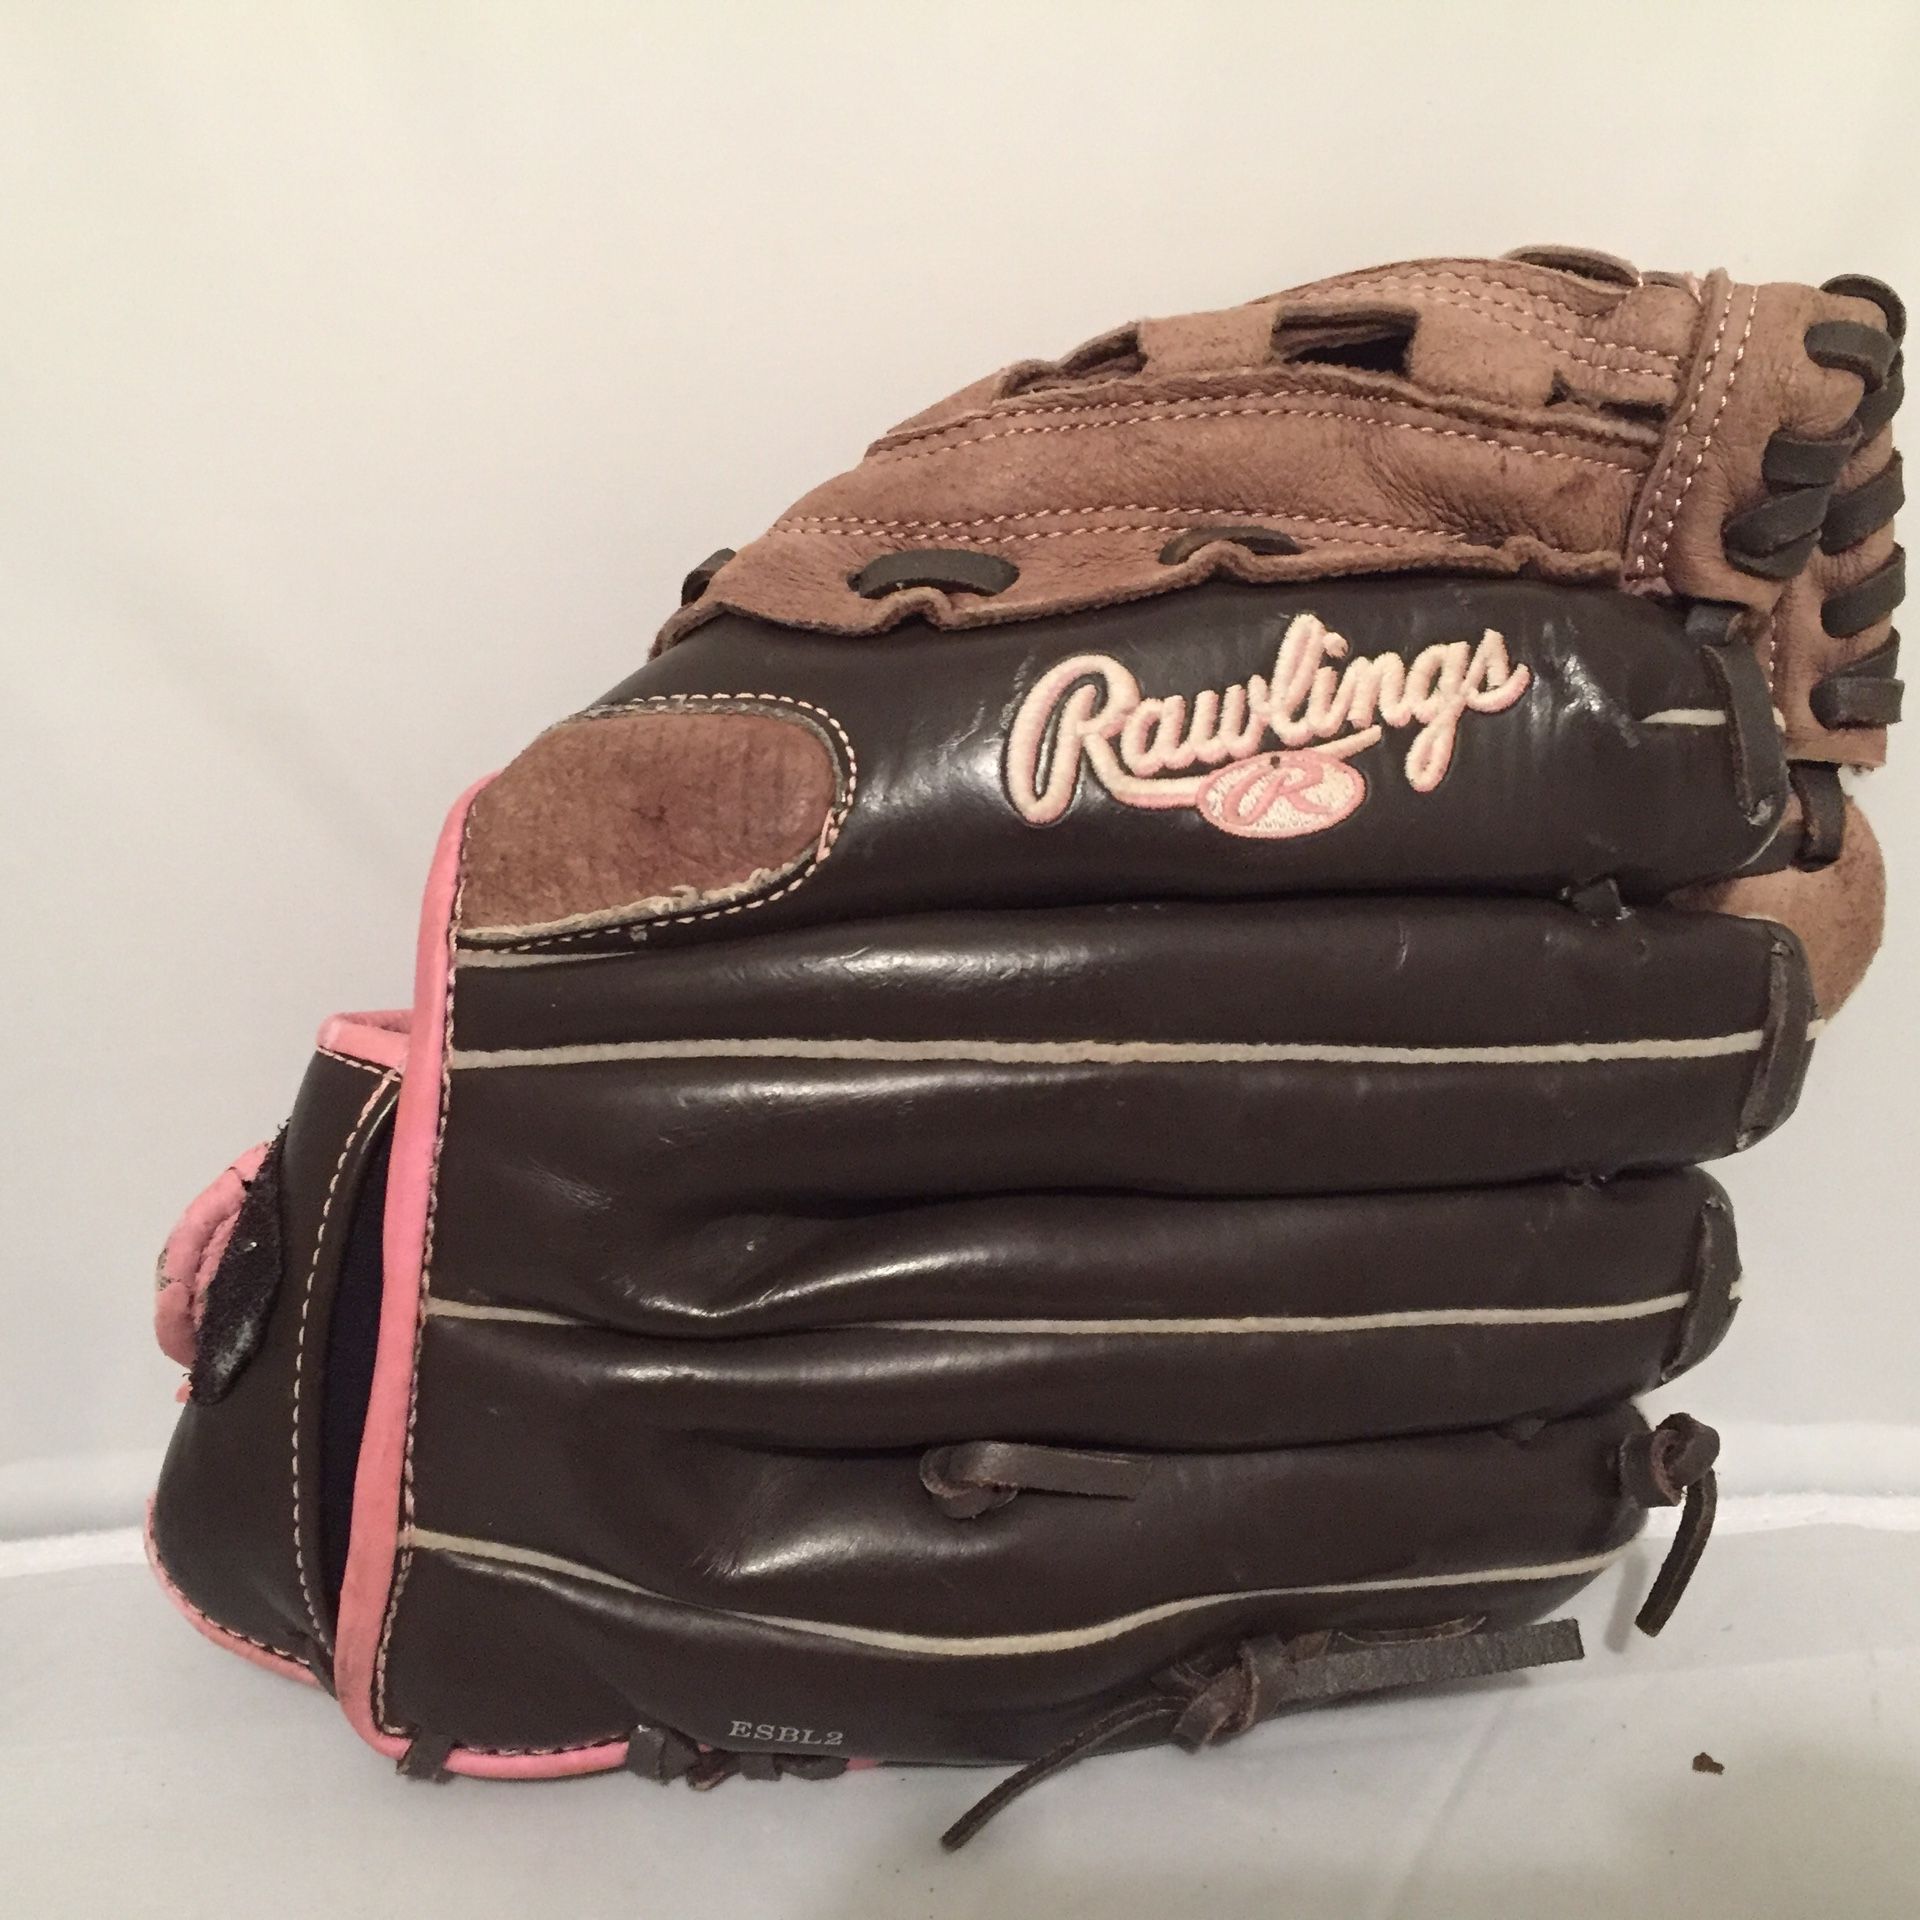 Rawlings Fastpitch Softball Glove LHT 11” ESBL2 pink lettering